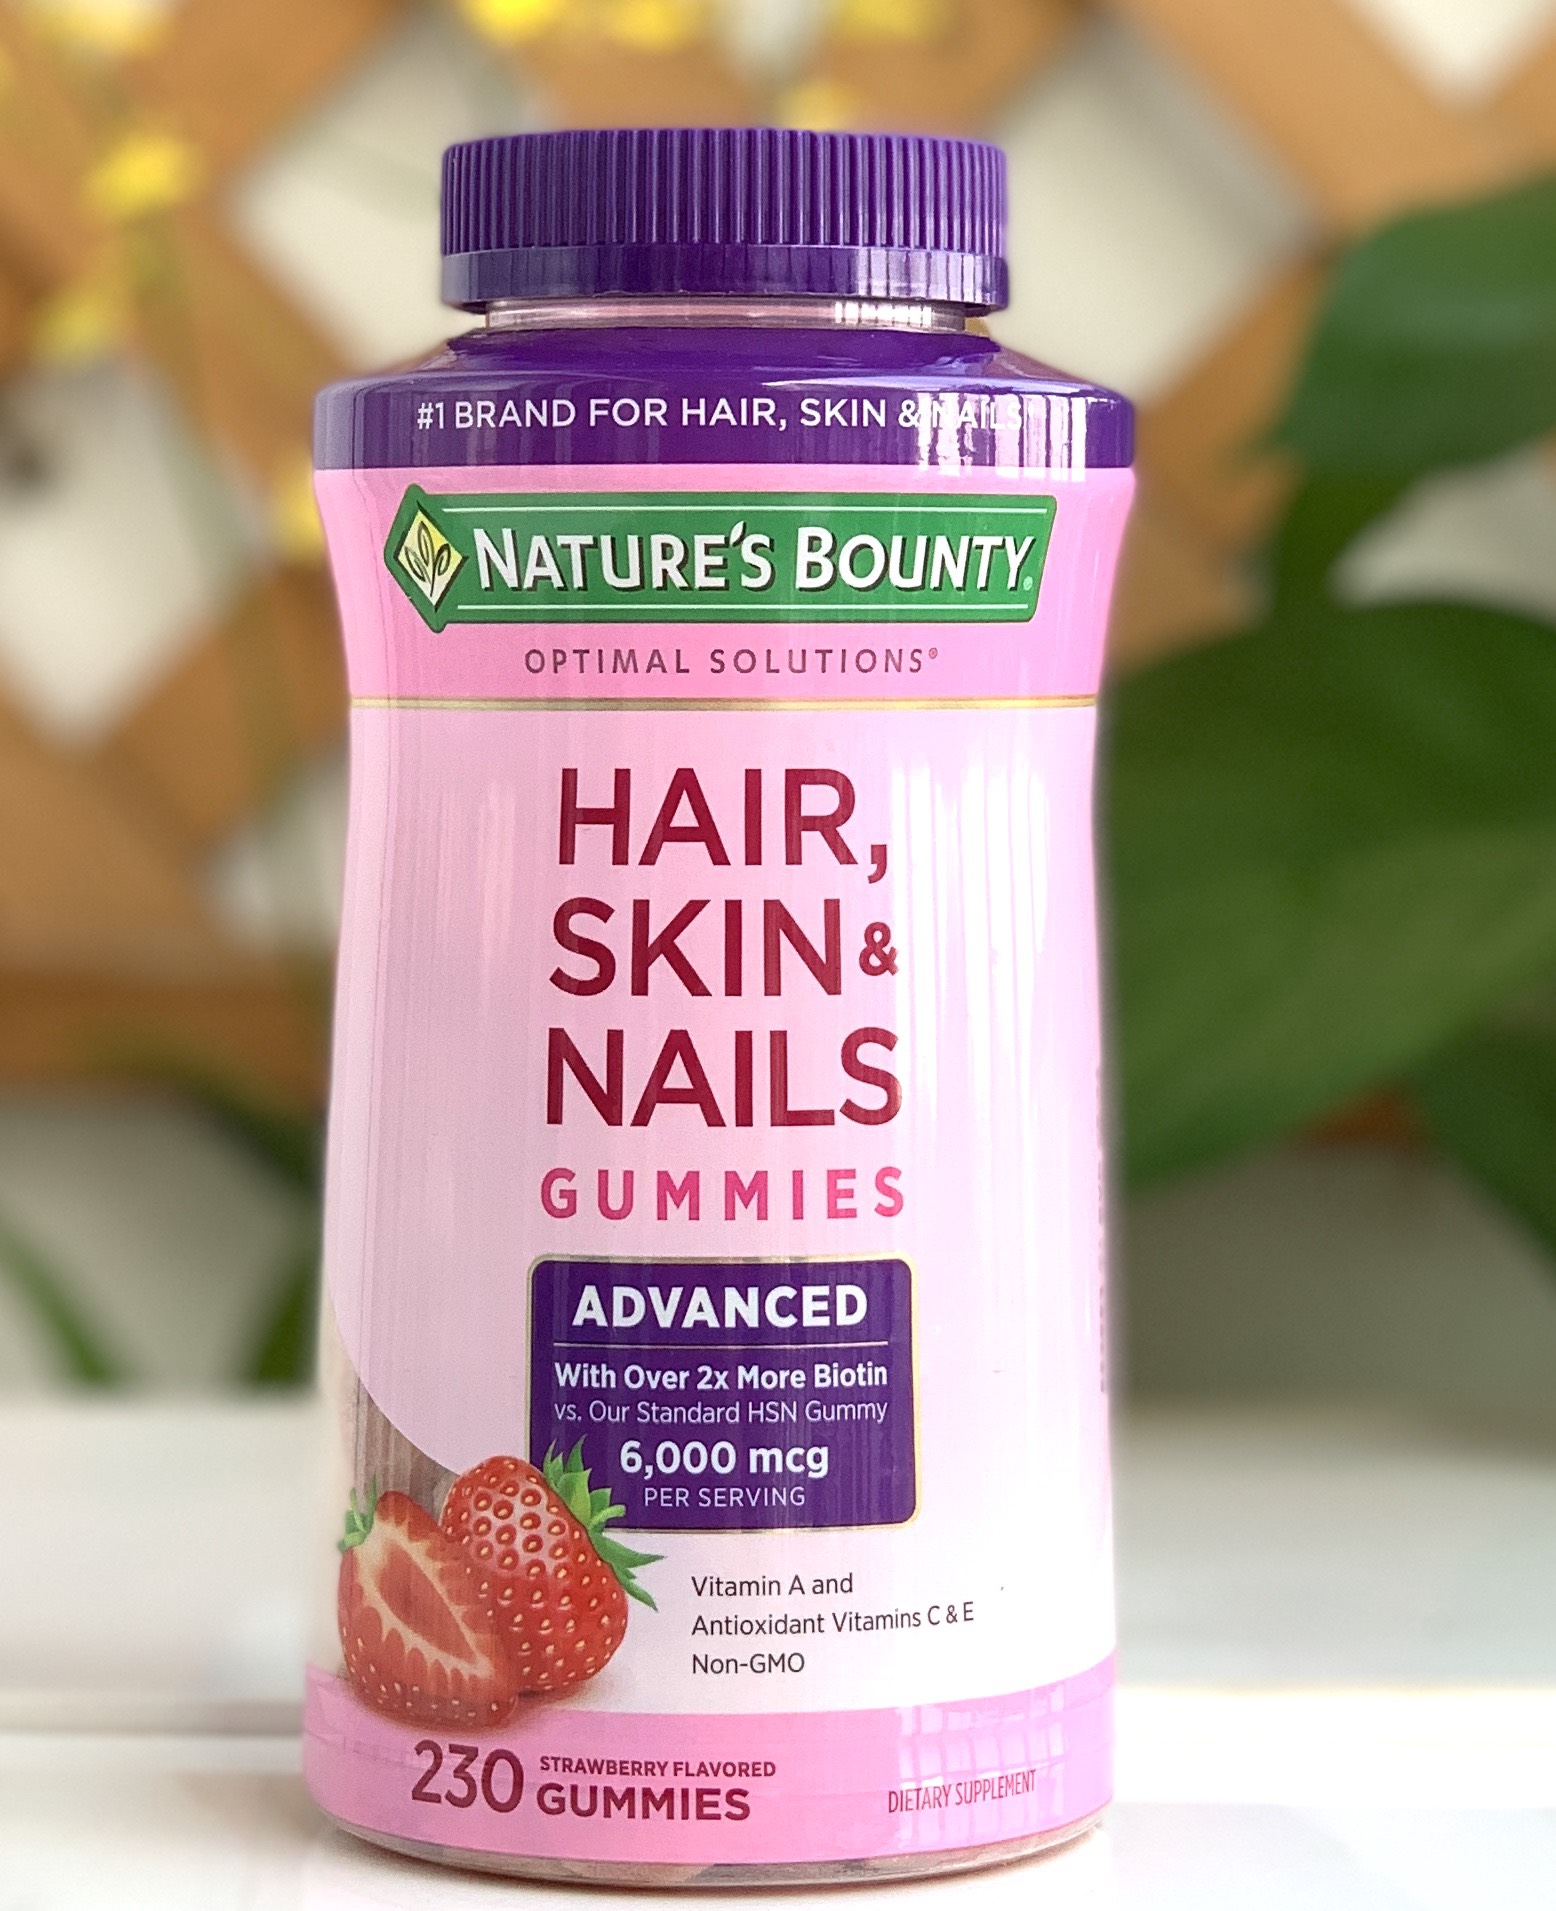 Nature's Bounty HAIR,SKIN AND NAILS Advanced 230 Gummies (3 x 230), 2  x Biotin | eBay